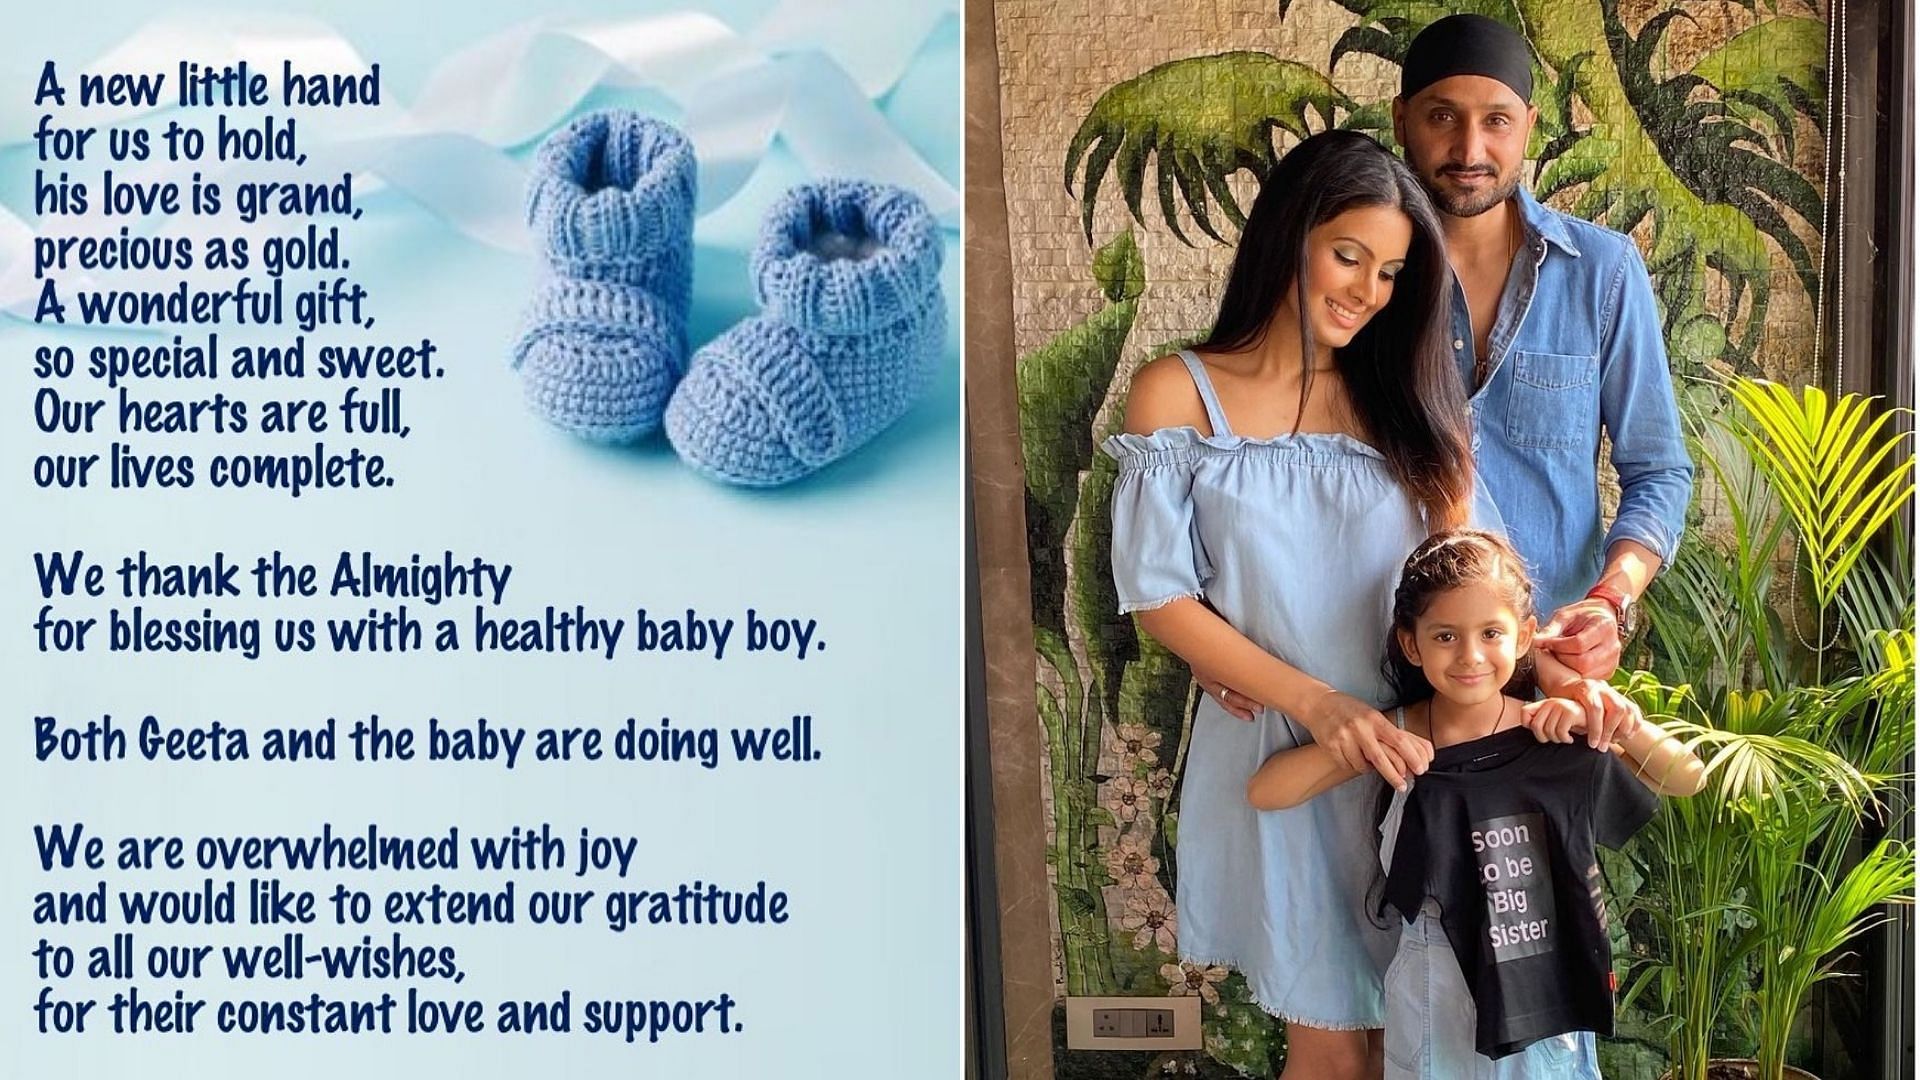 <div class="paragraphs"><p>Harbhajan Singh and Geeta Basra welcome their baby boy.</p></div>